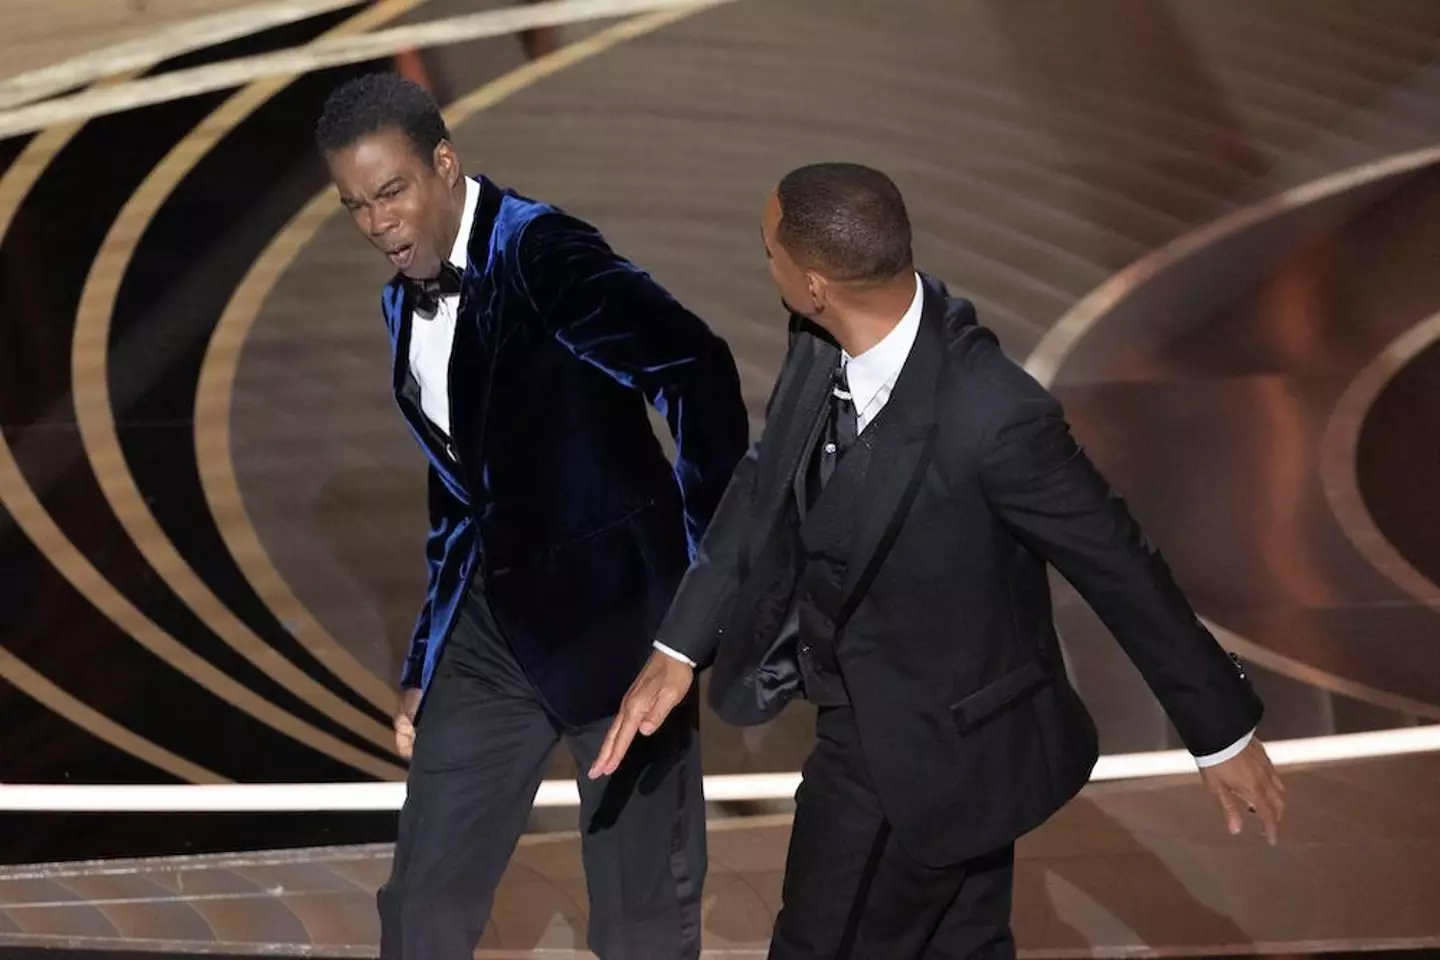 Will Smith slapped Chris Rock at last year's Oscars.